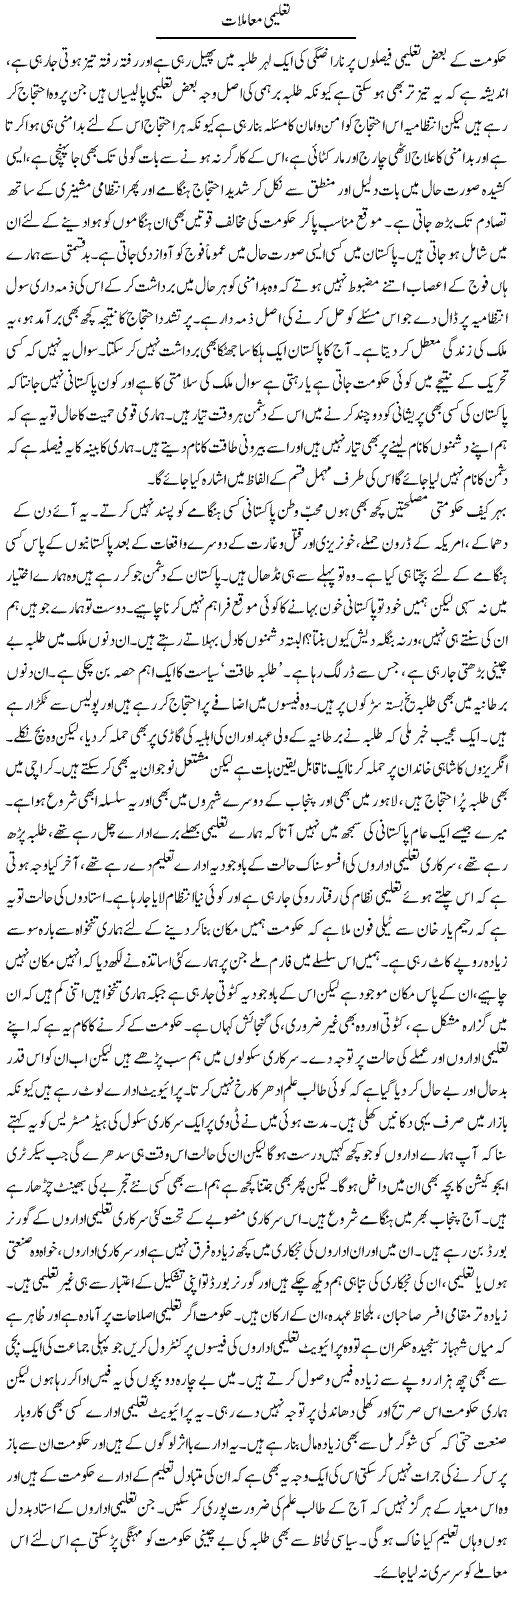 Educational Issues Express Column Abdul Qadir 12 December 2010